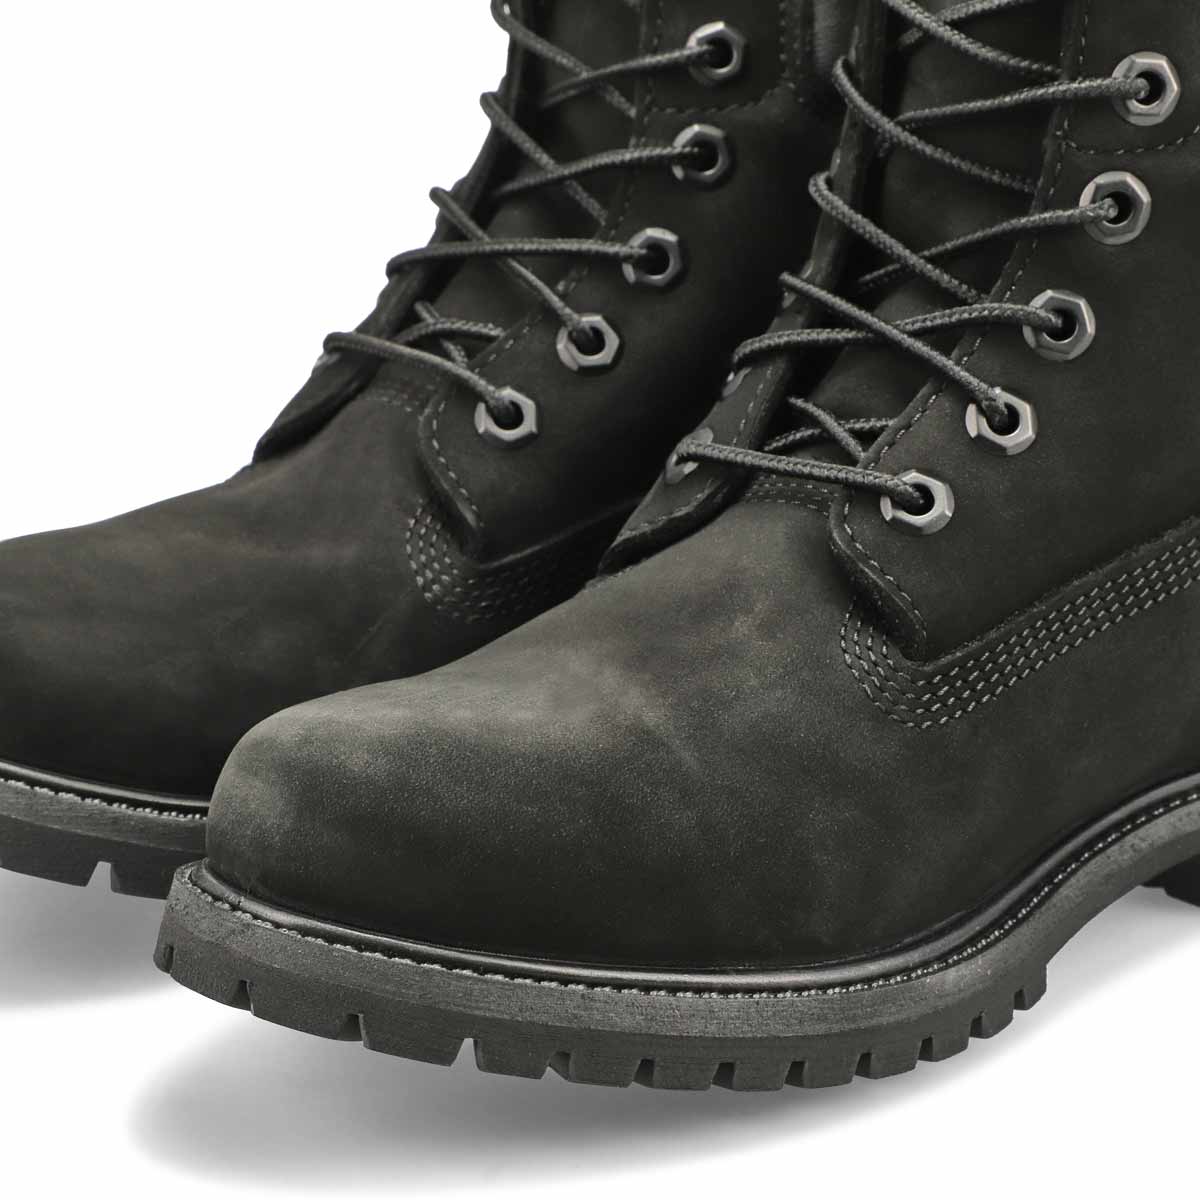 Women's 6 Premium Boot - Black